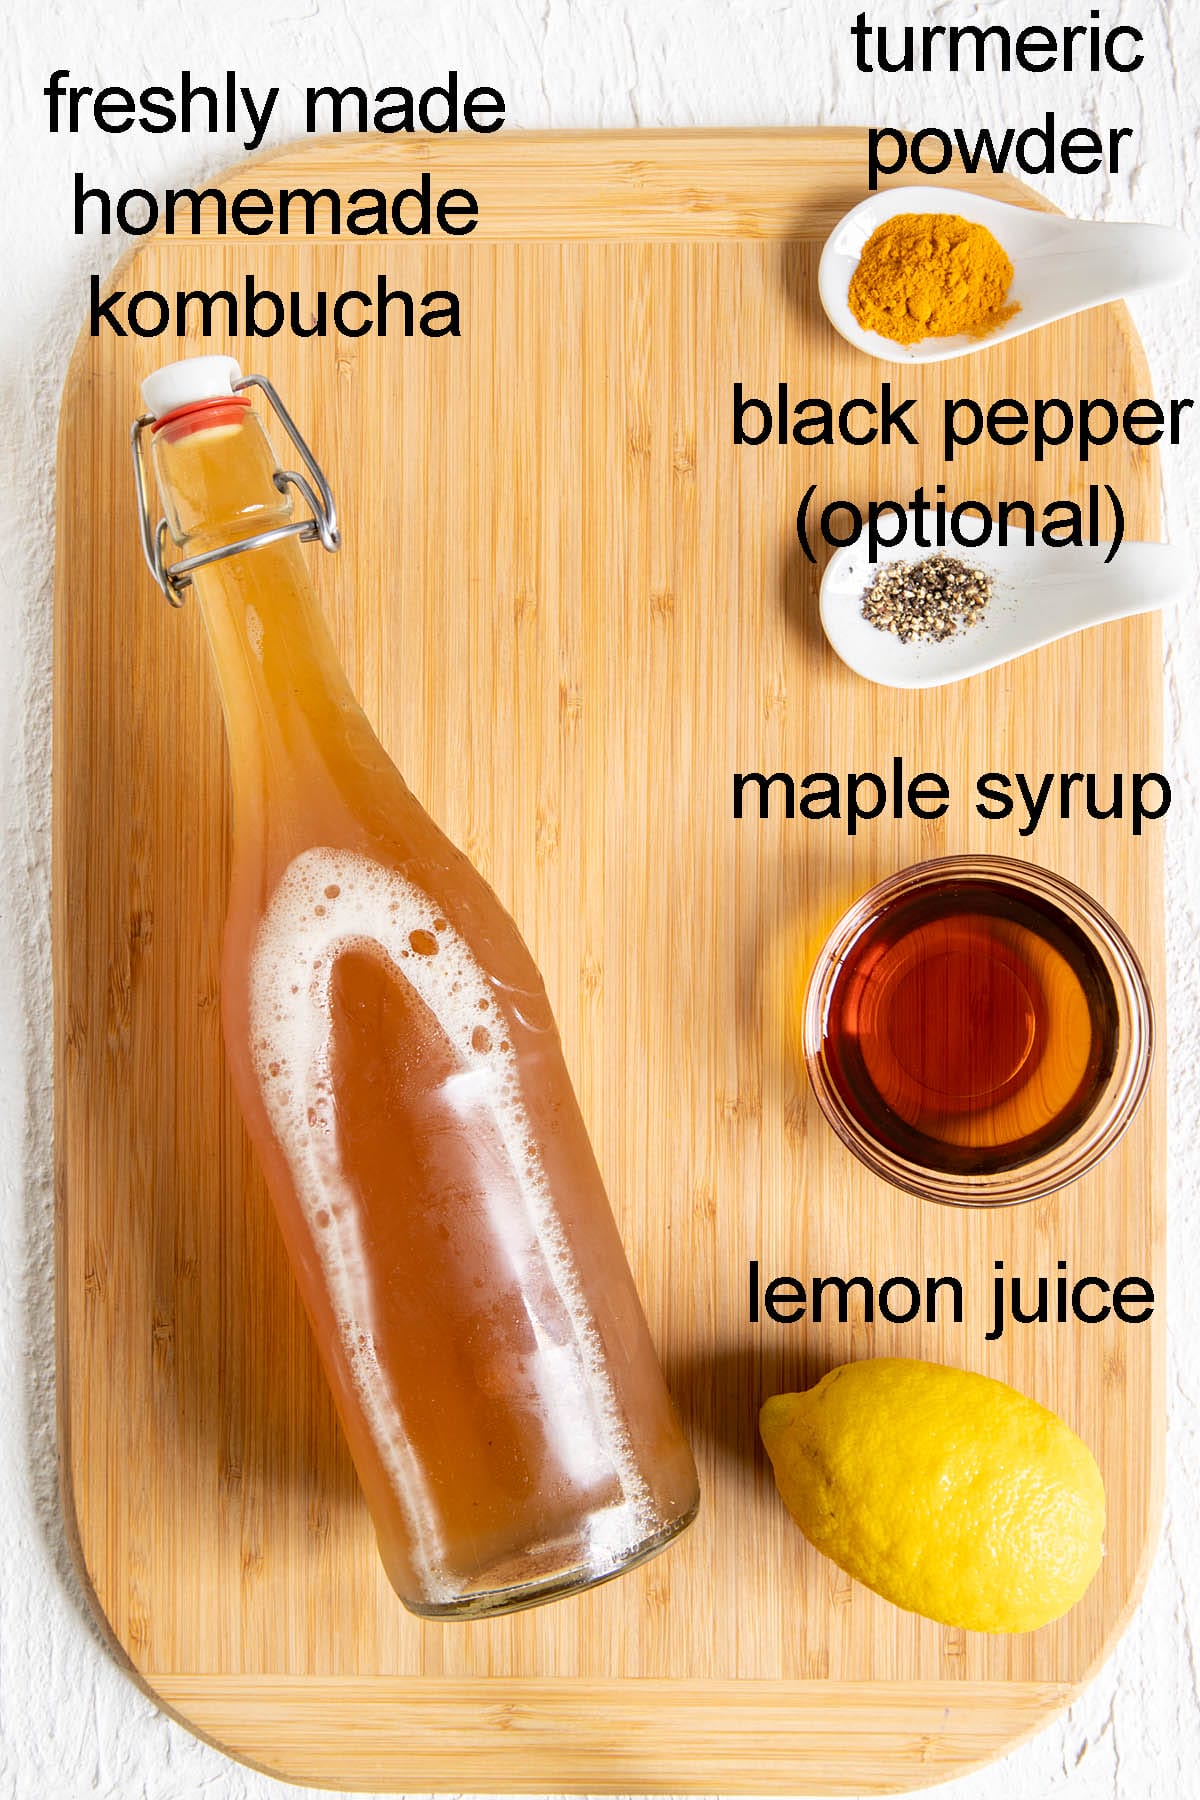 Lemon turmeric kombucha ingredients on cutting board with labels.